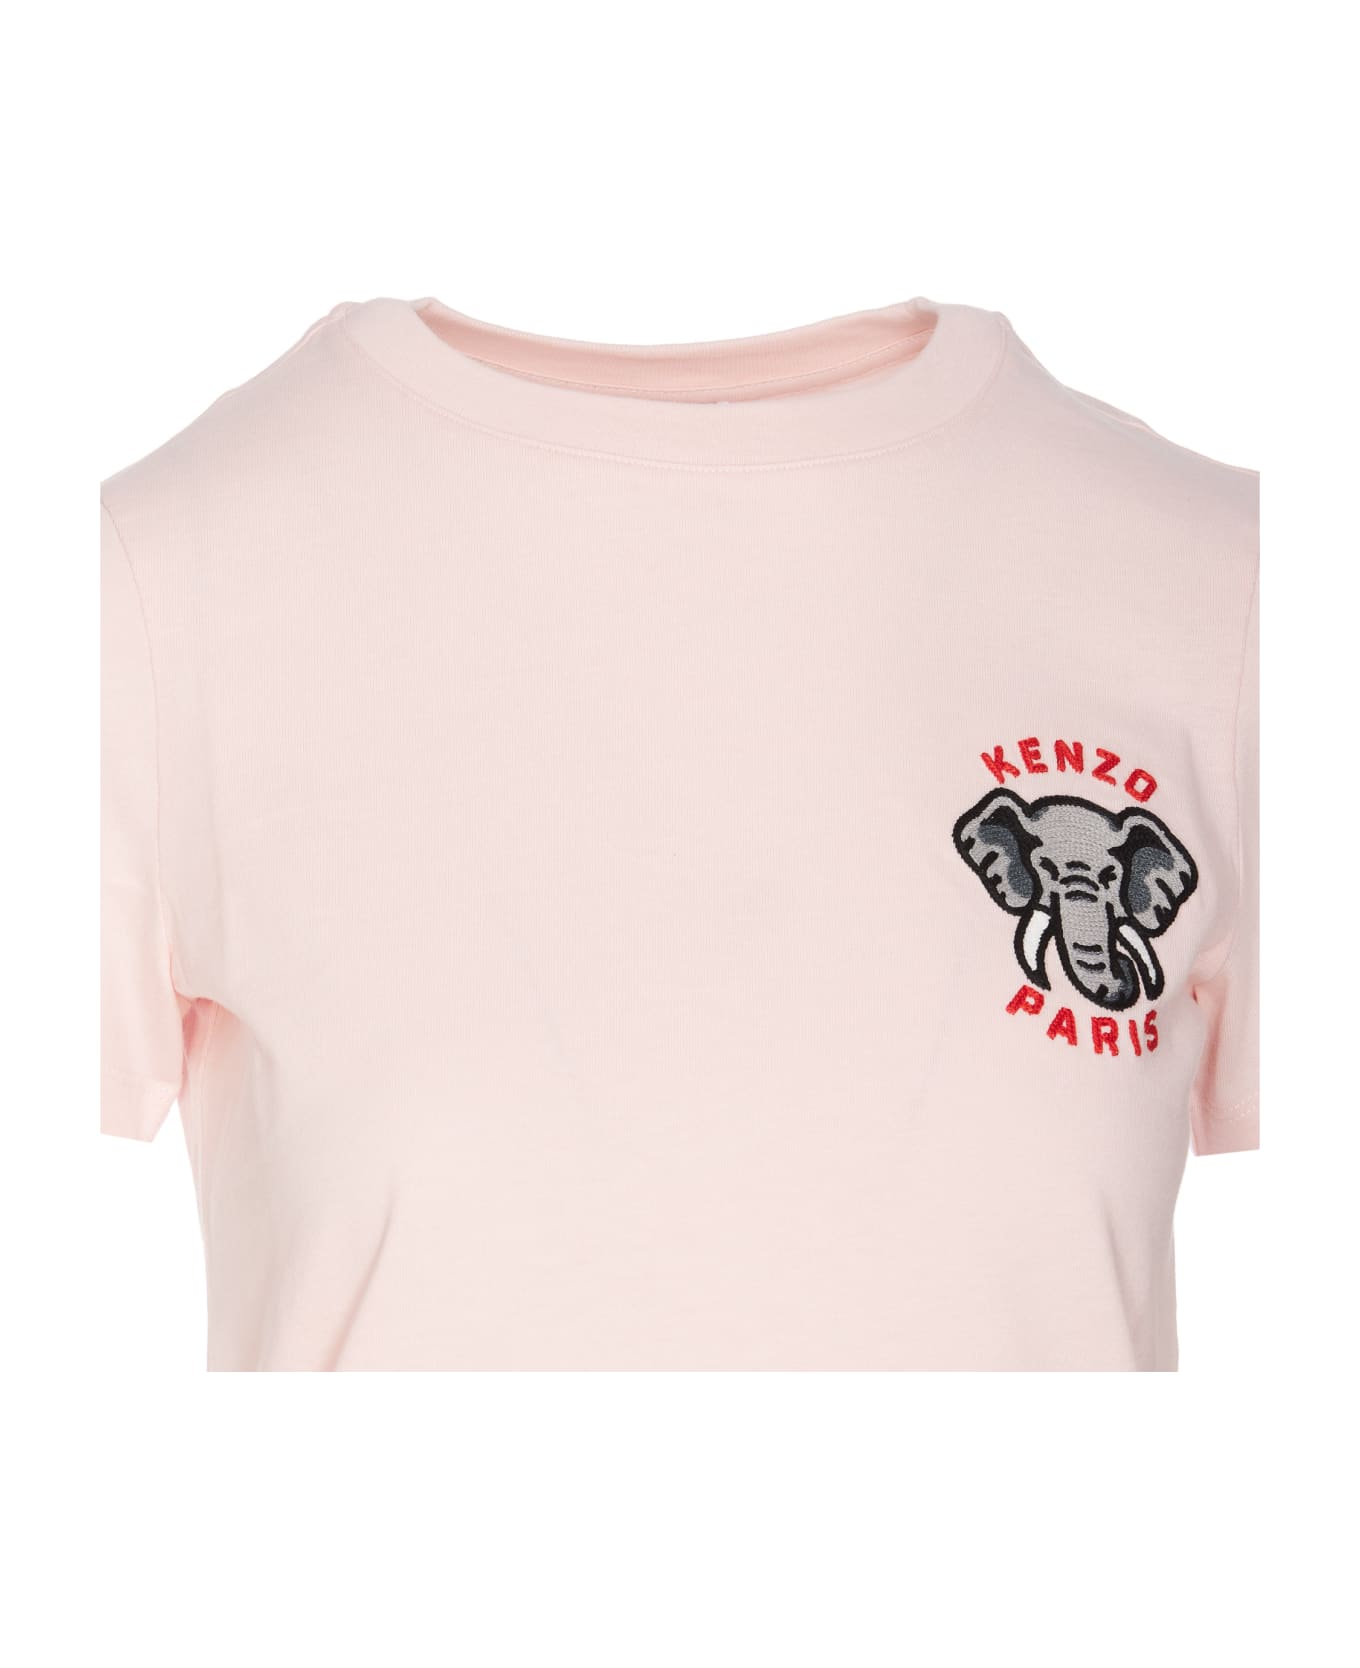 Kenzo Crest Elephant T-shirt - FADED PINK Tシャツ